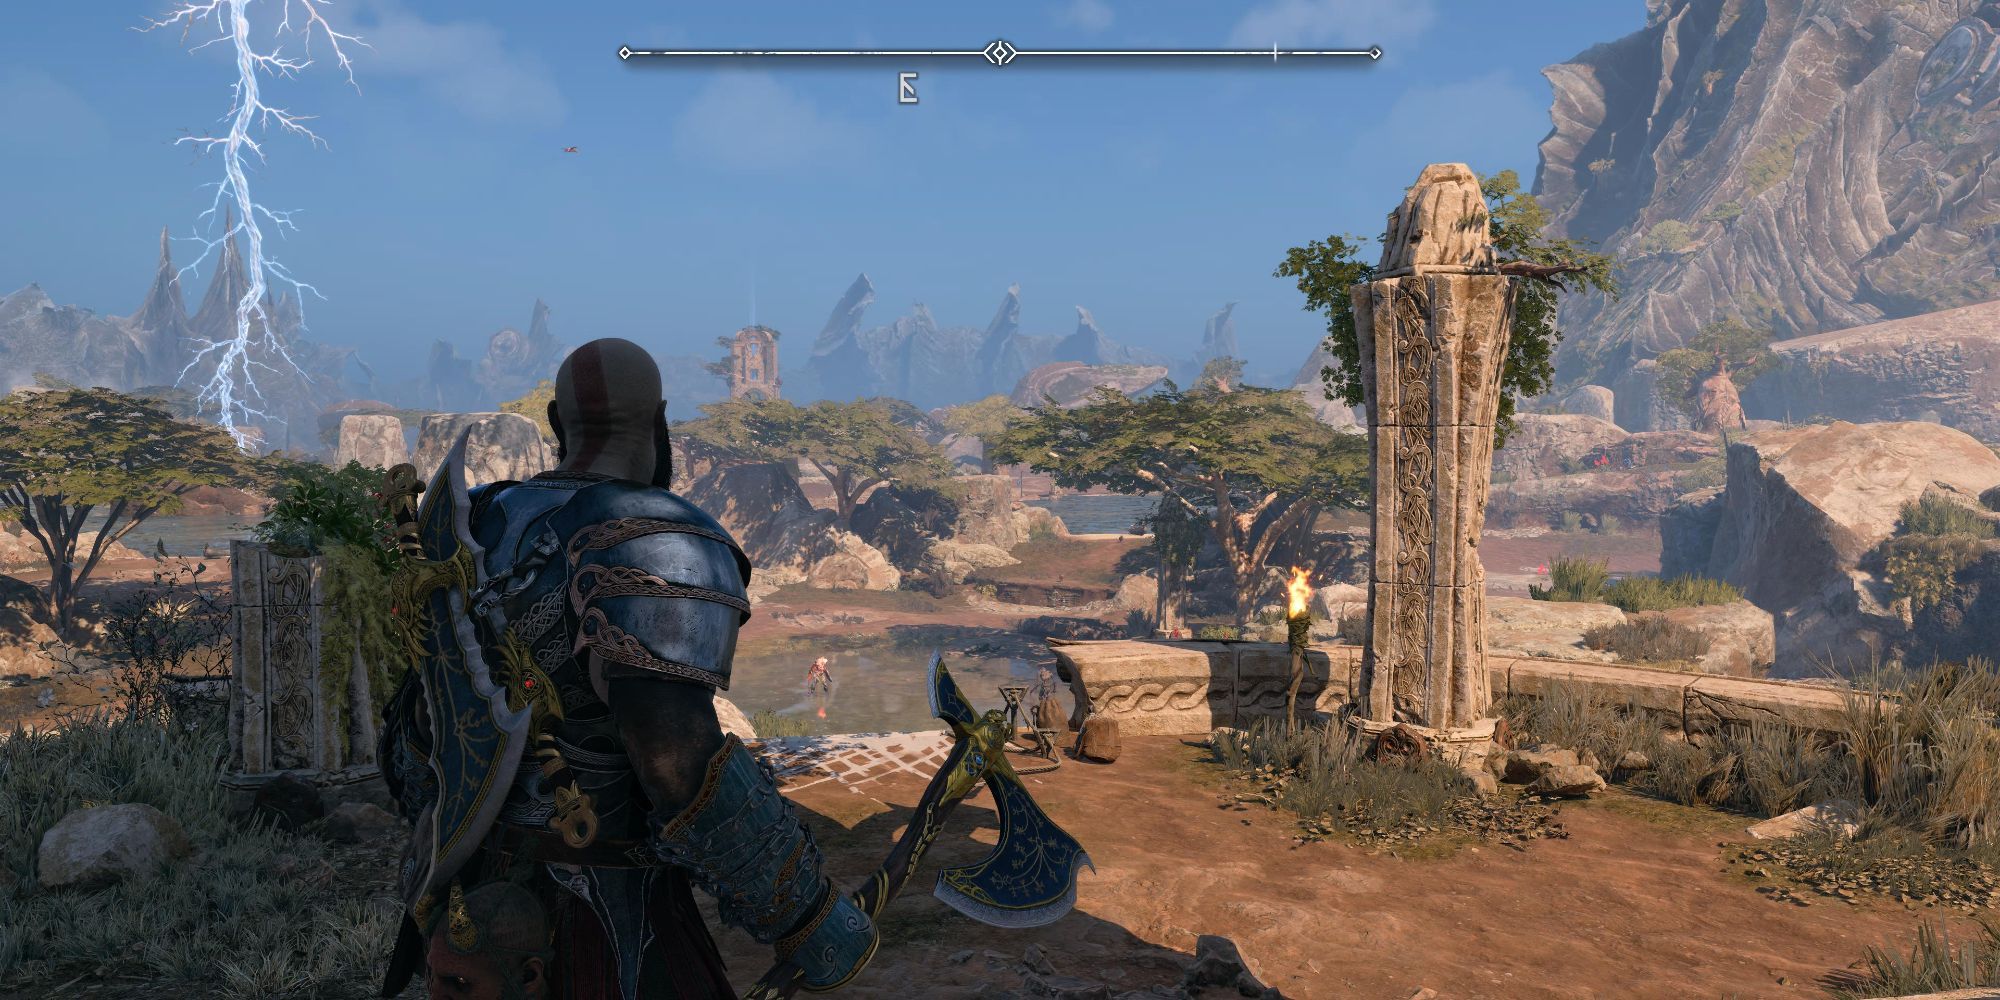 Kratos in the Vanaheim Western Plains Mystic Gateway, looking towards the docks